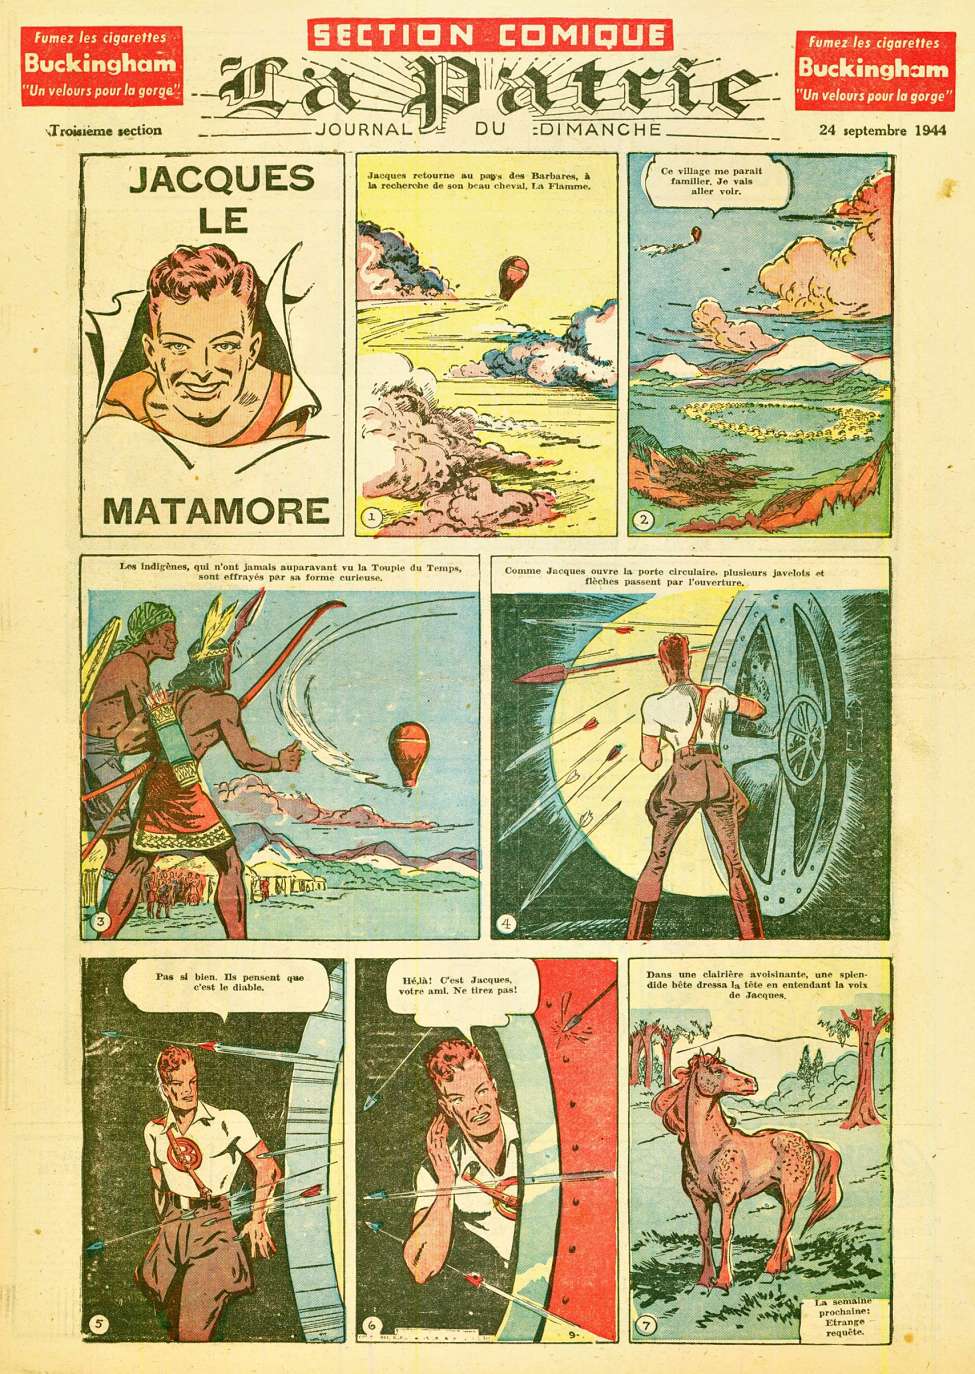 Comic Book Cover For La Patrie - Section Comique (1944-09-24)